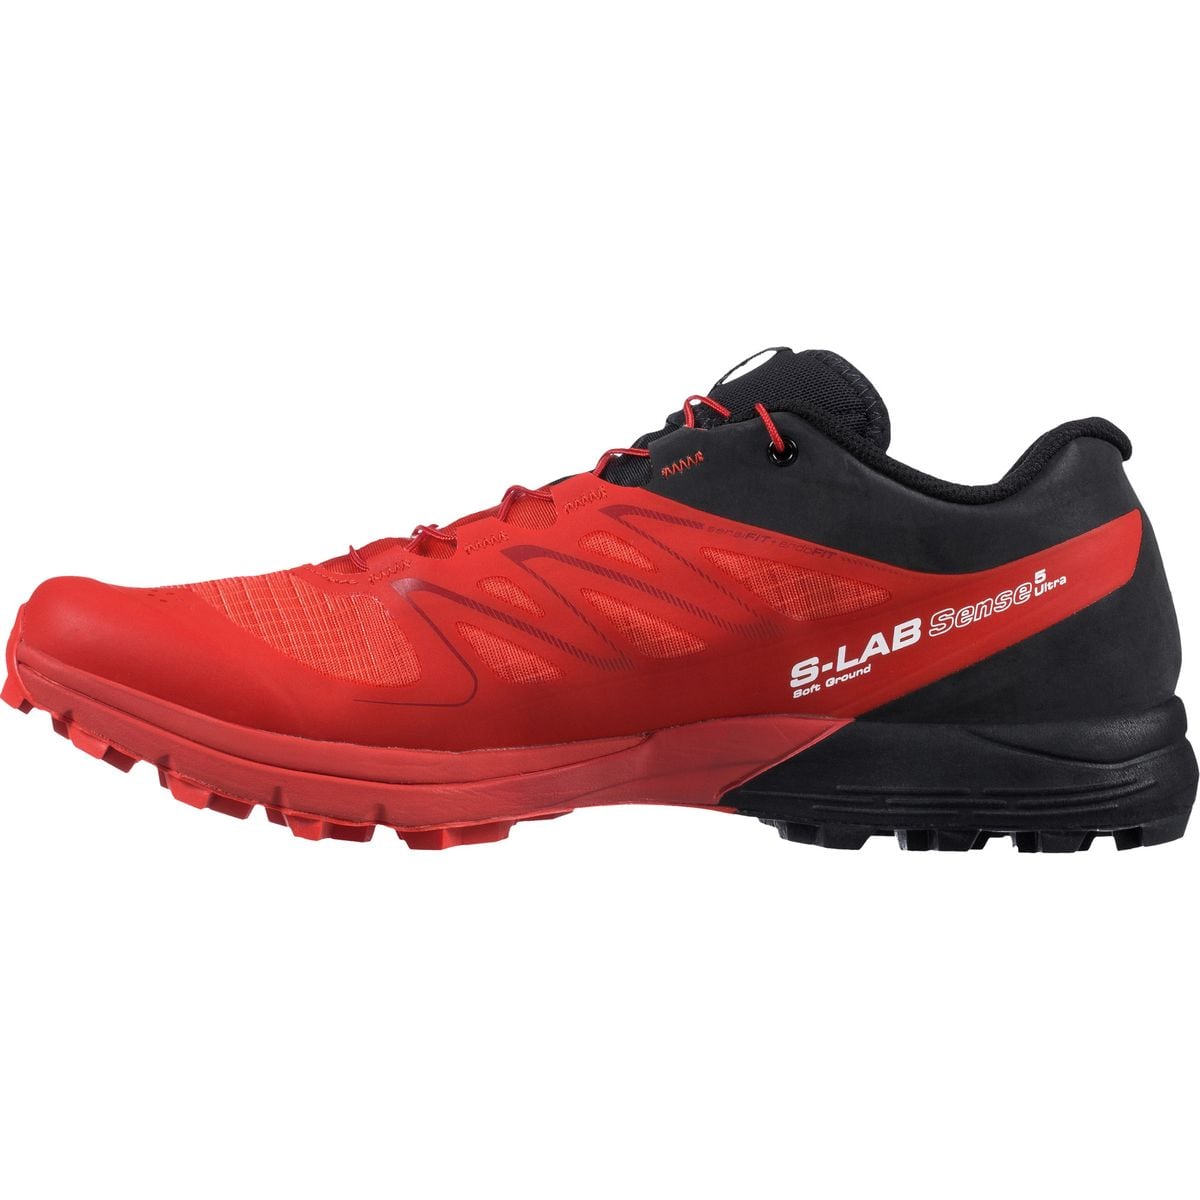 S-Lab 5 Ultra SG Trail Running Shoe Footwear